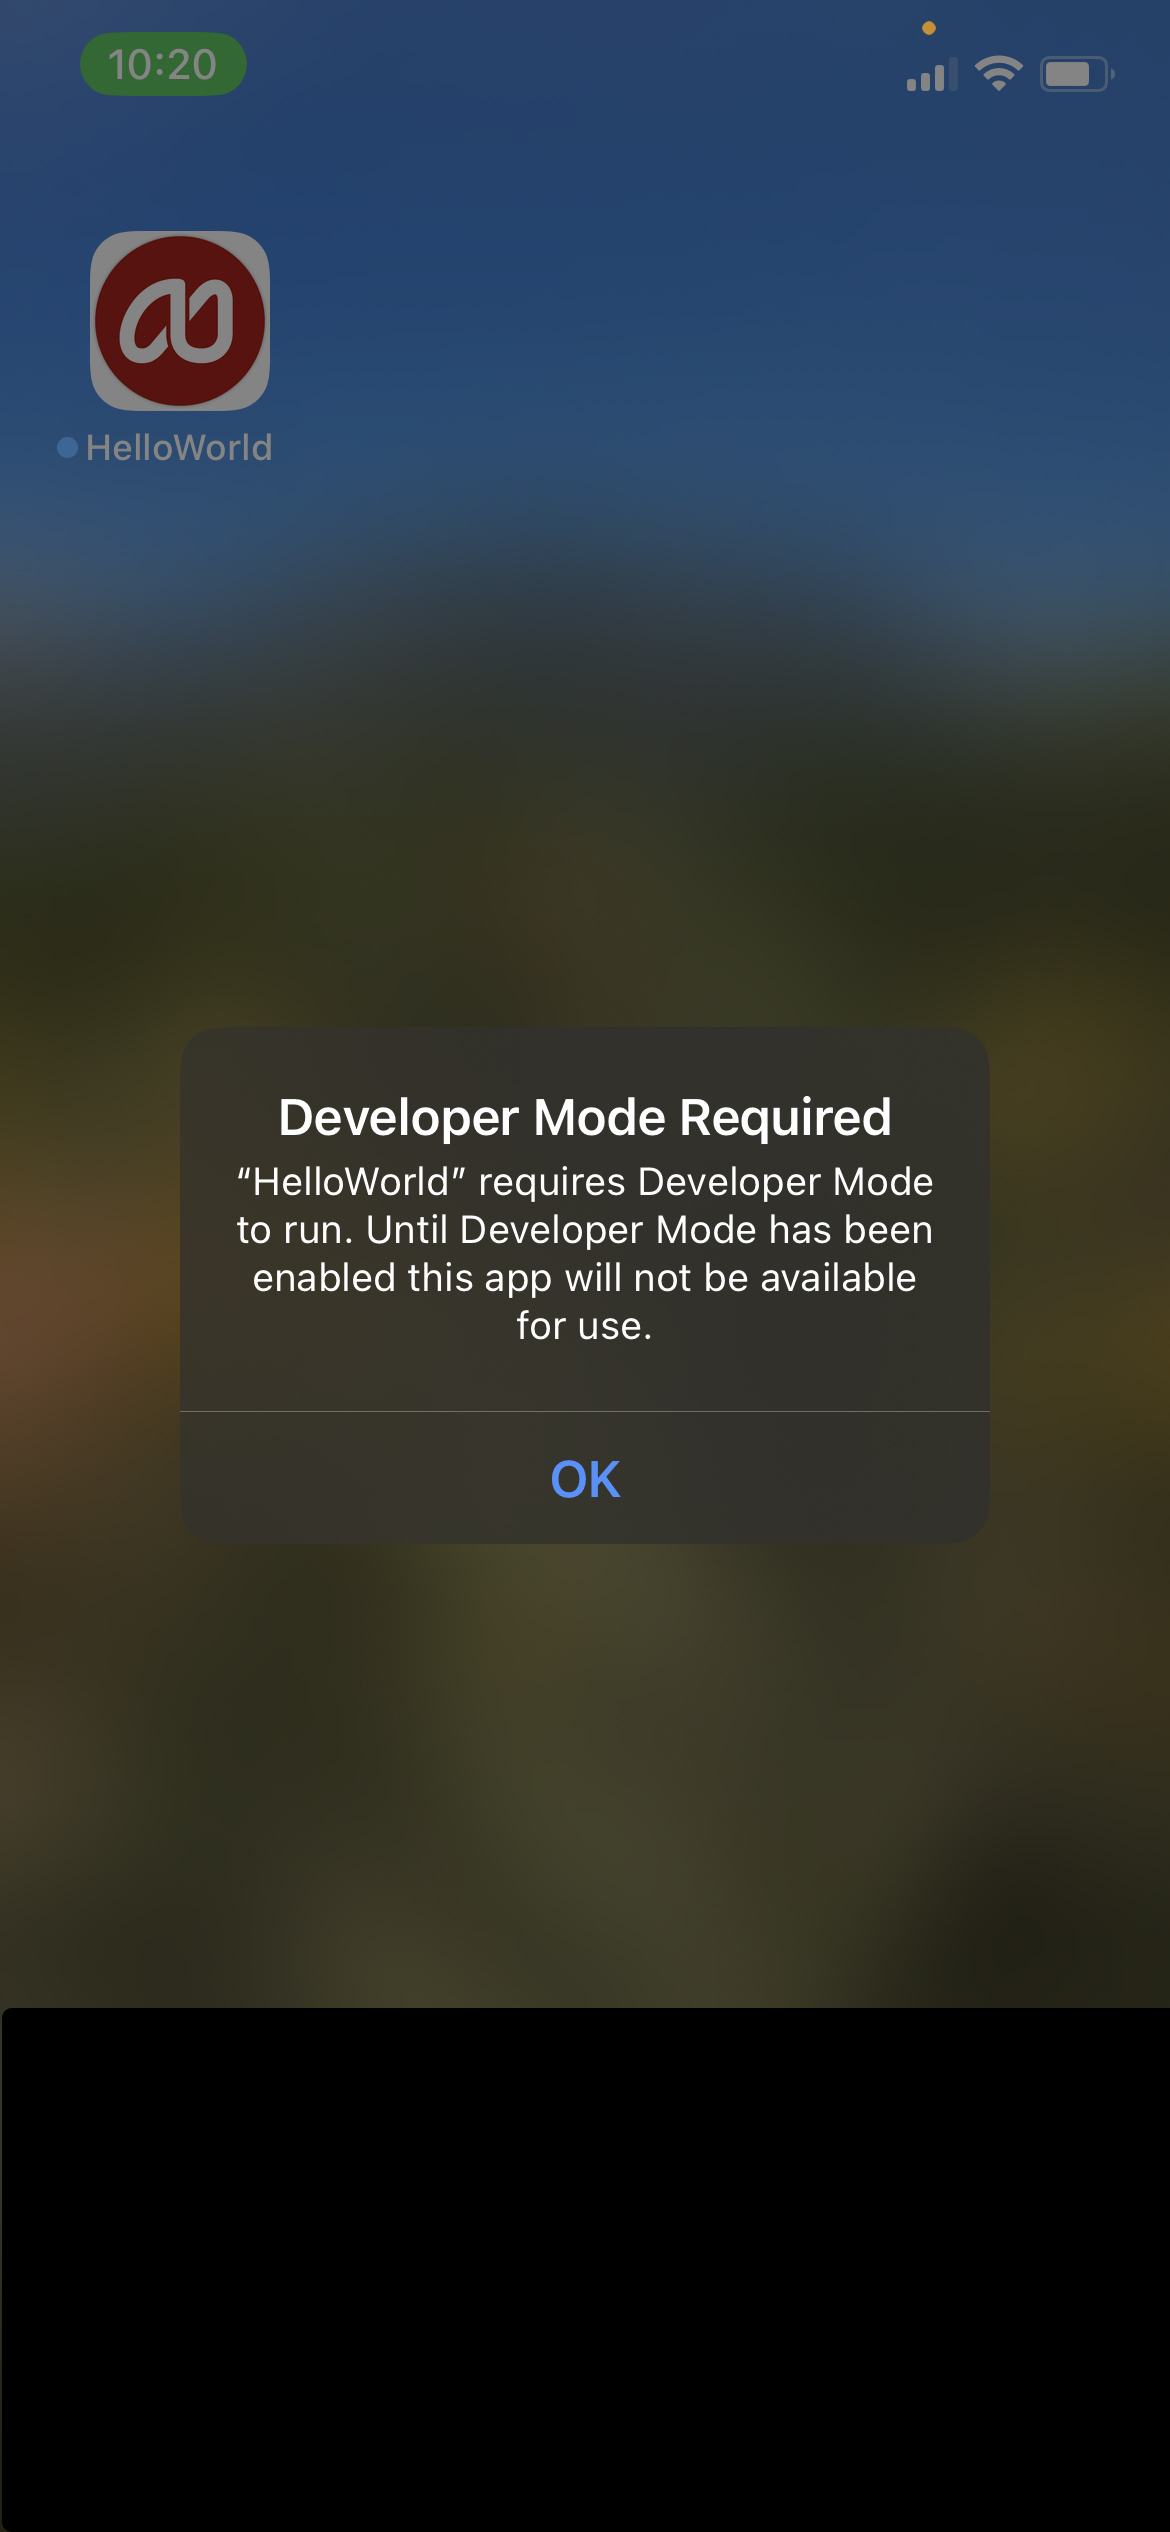 Developer Mode required dialog